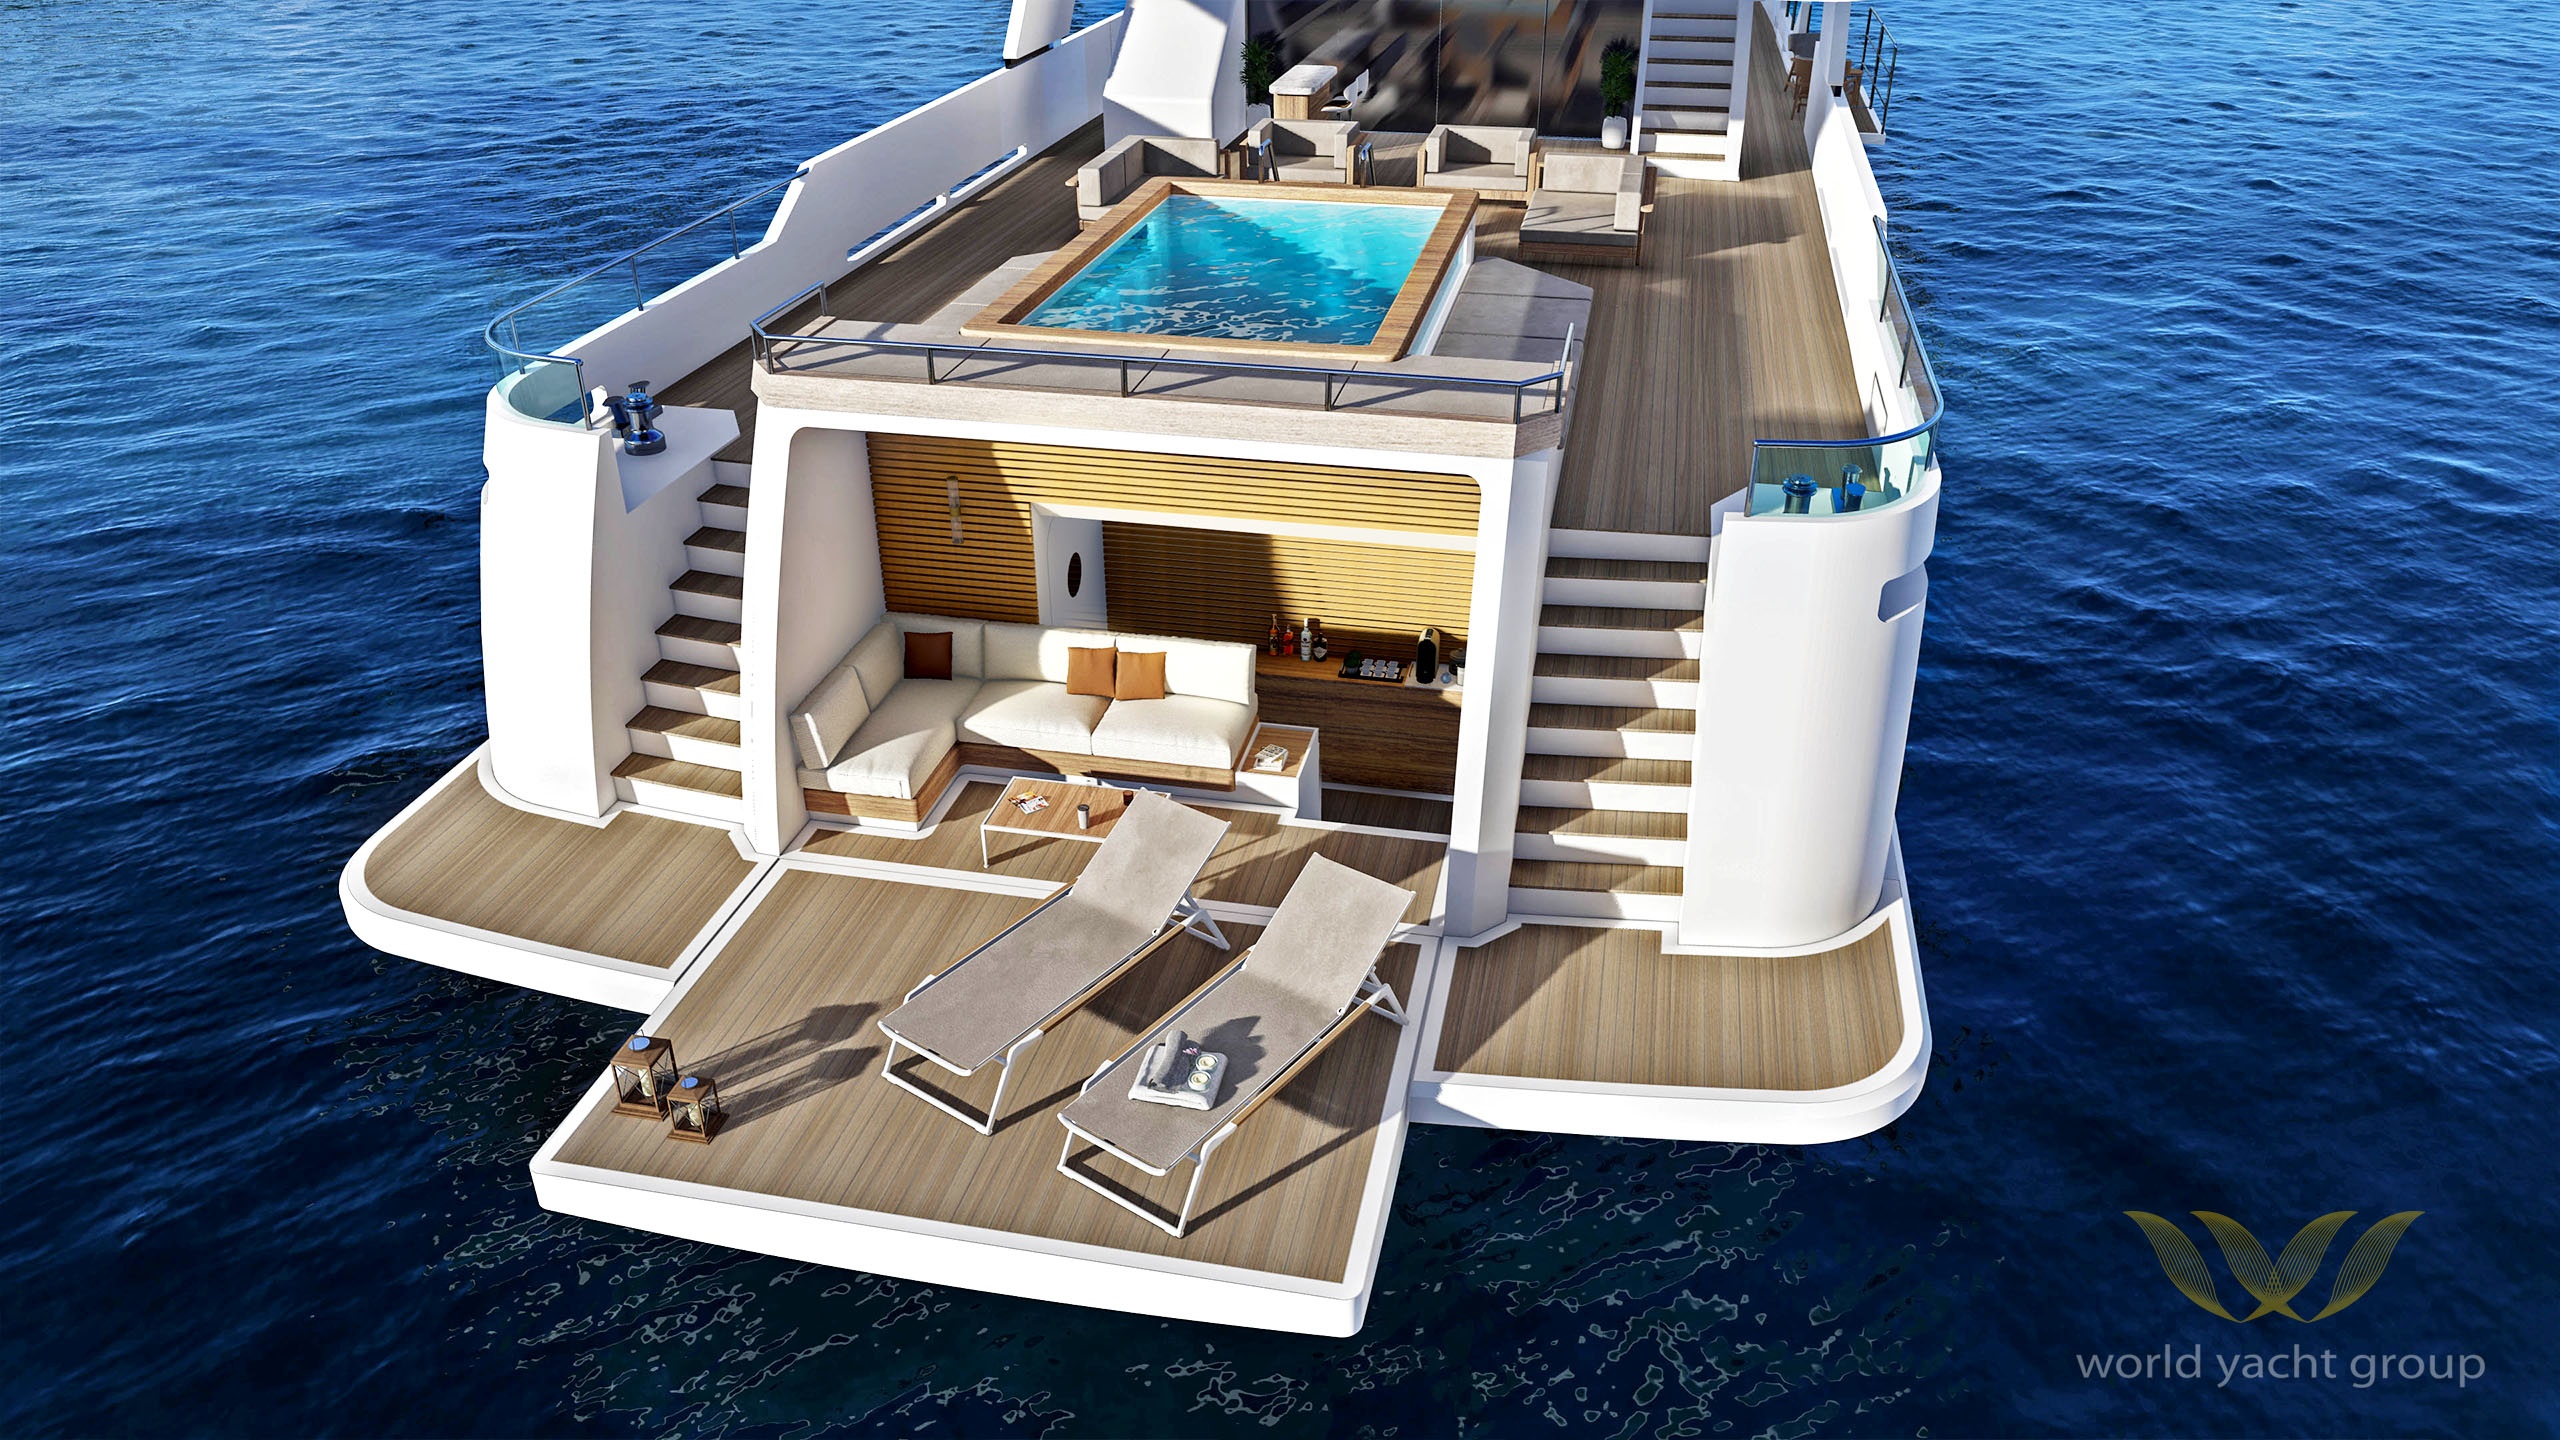 Project-Artemis-World-Yacht-Group-Yacht-For-Sale-Beach-Club